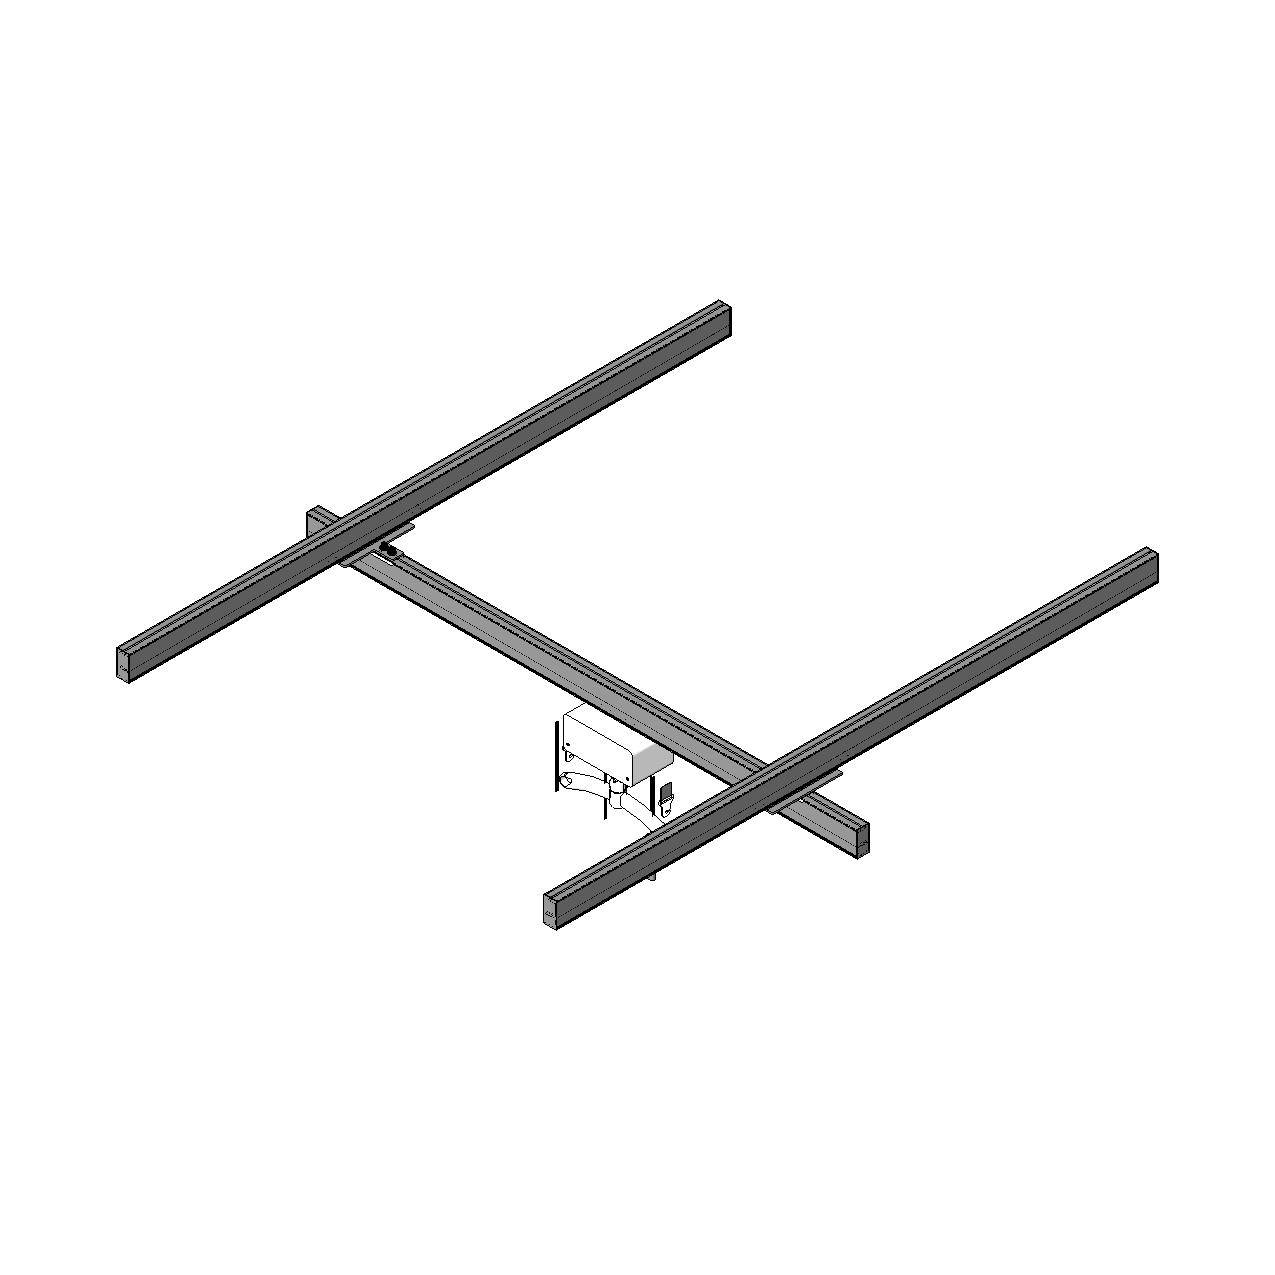 Ceiling Track Hoist - System Type G